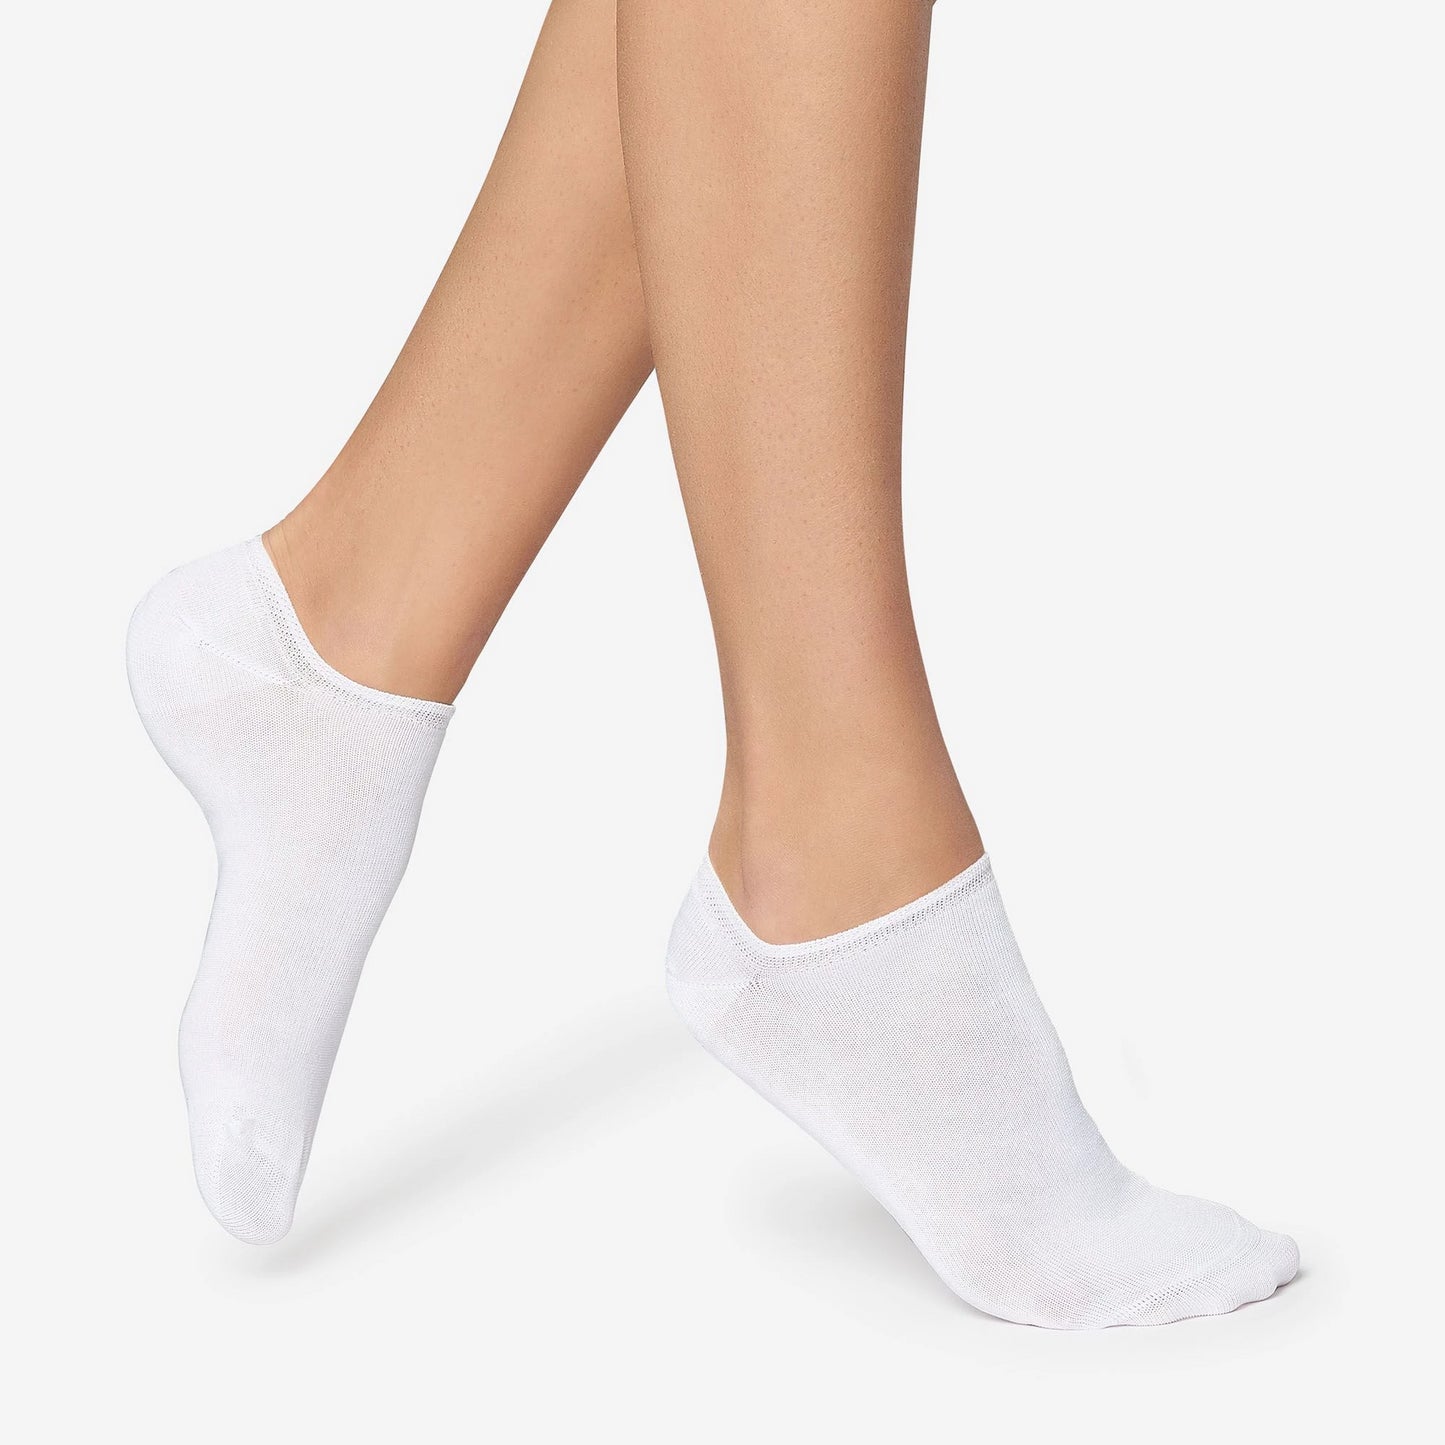 Omsa Minicalzino Liscio - white light low cotton ankle socks